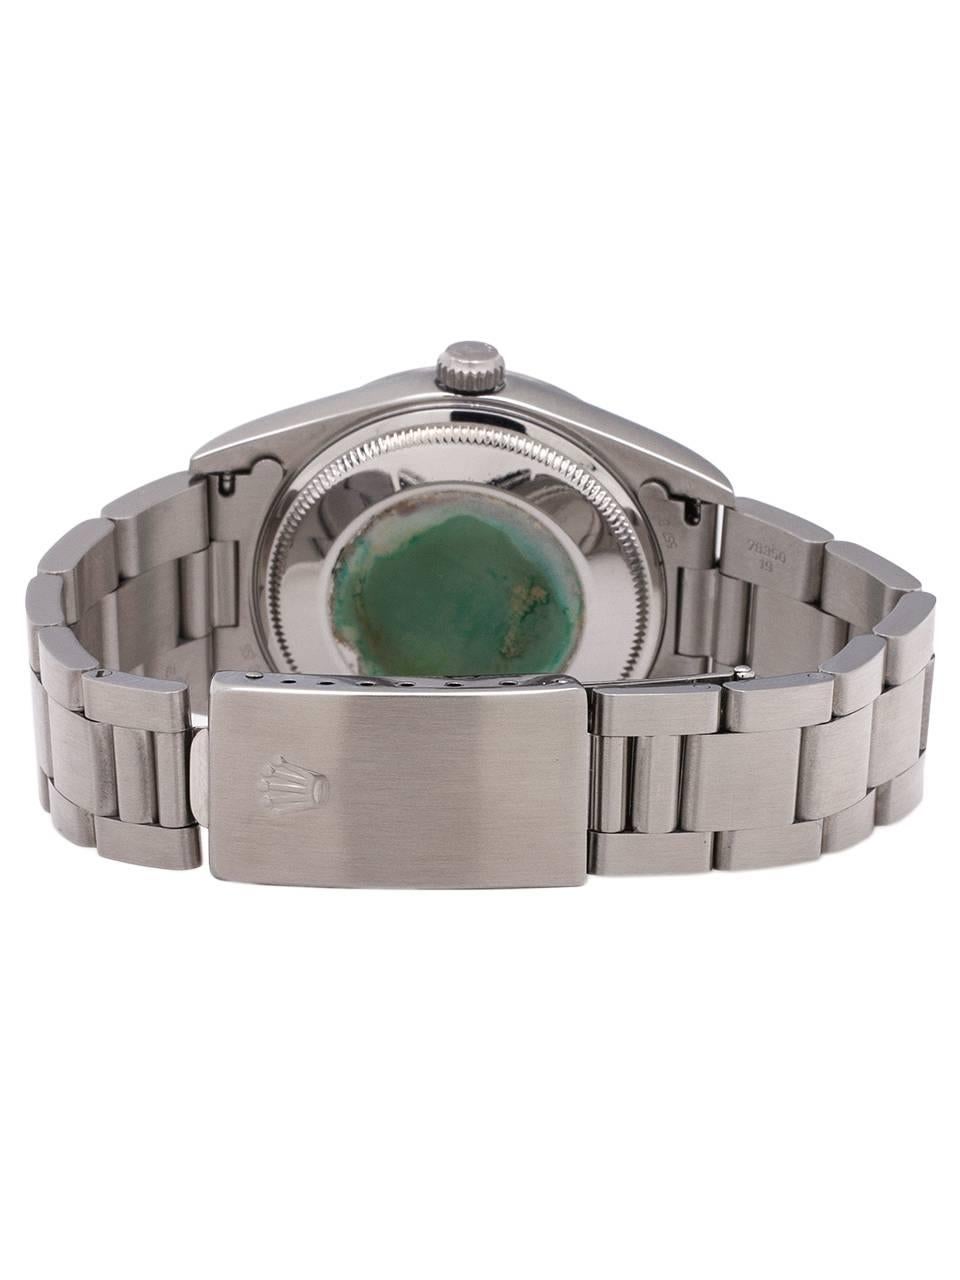 Men's Rolex Stainless Steel Airking self-winding wristwatch Ref 14000, c1995